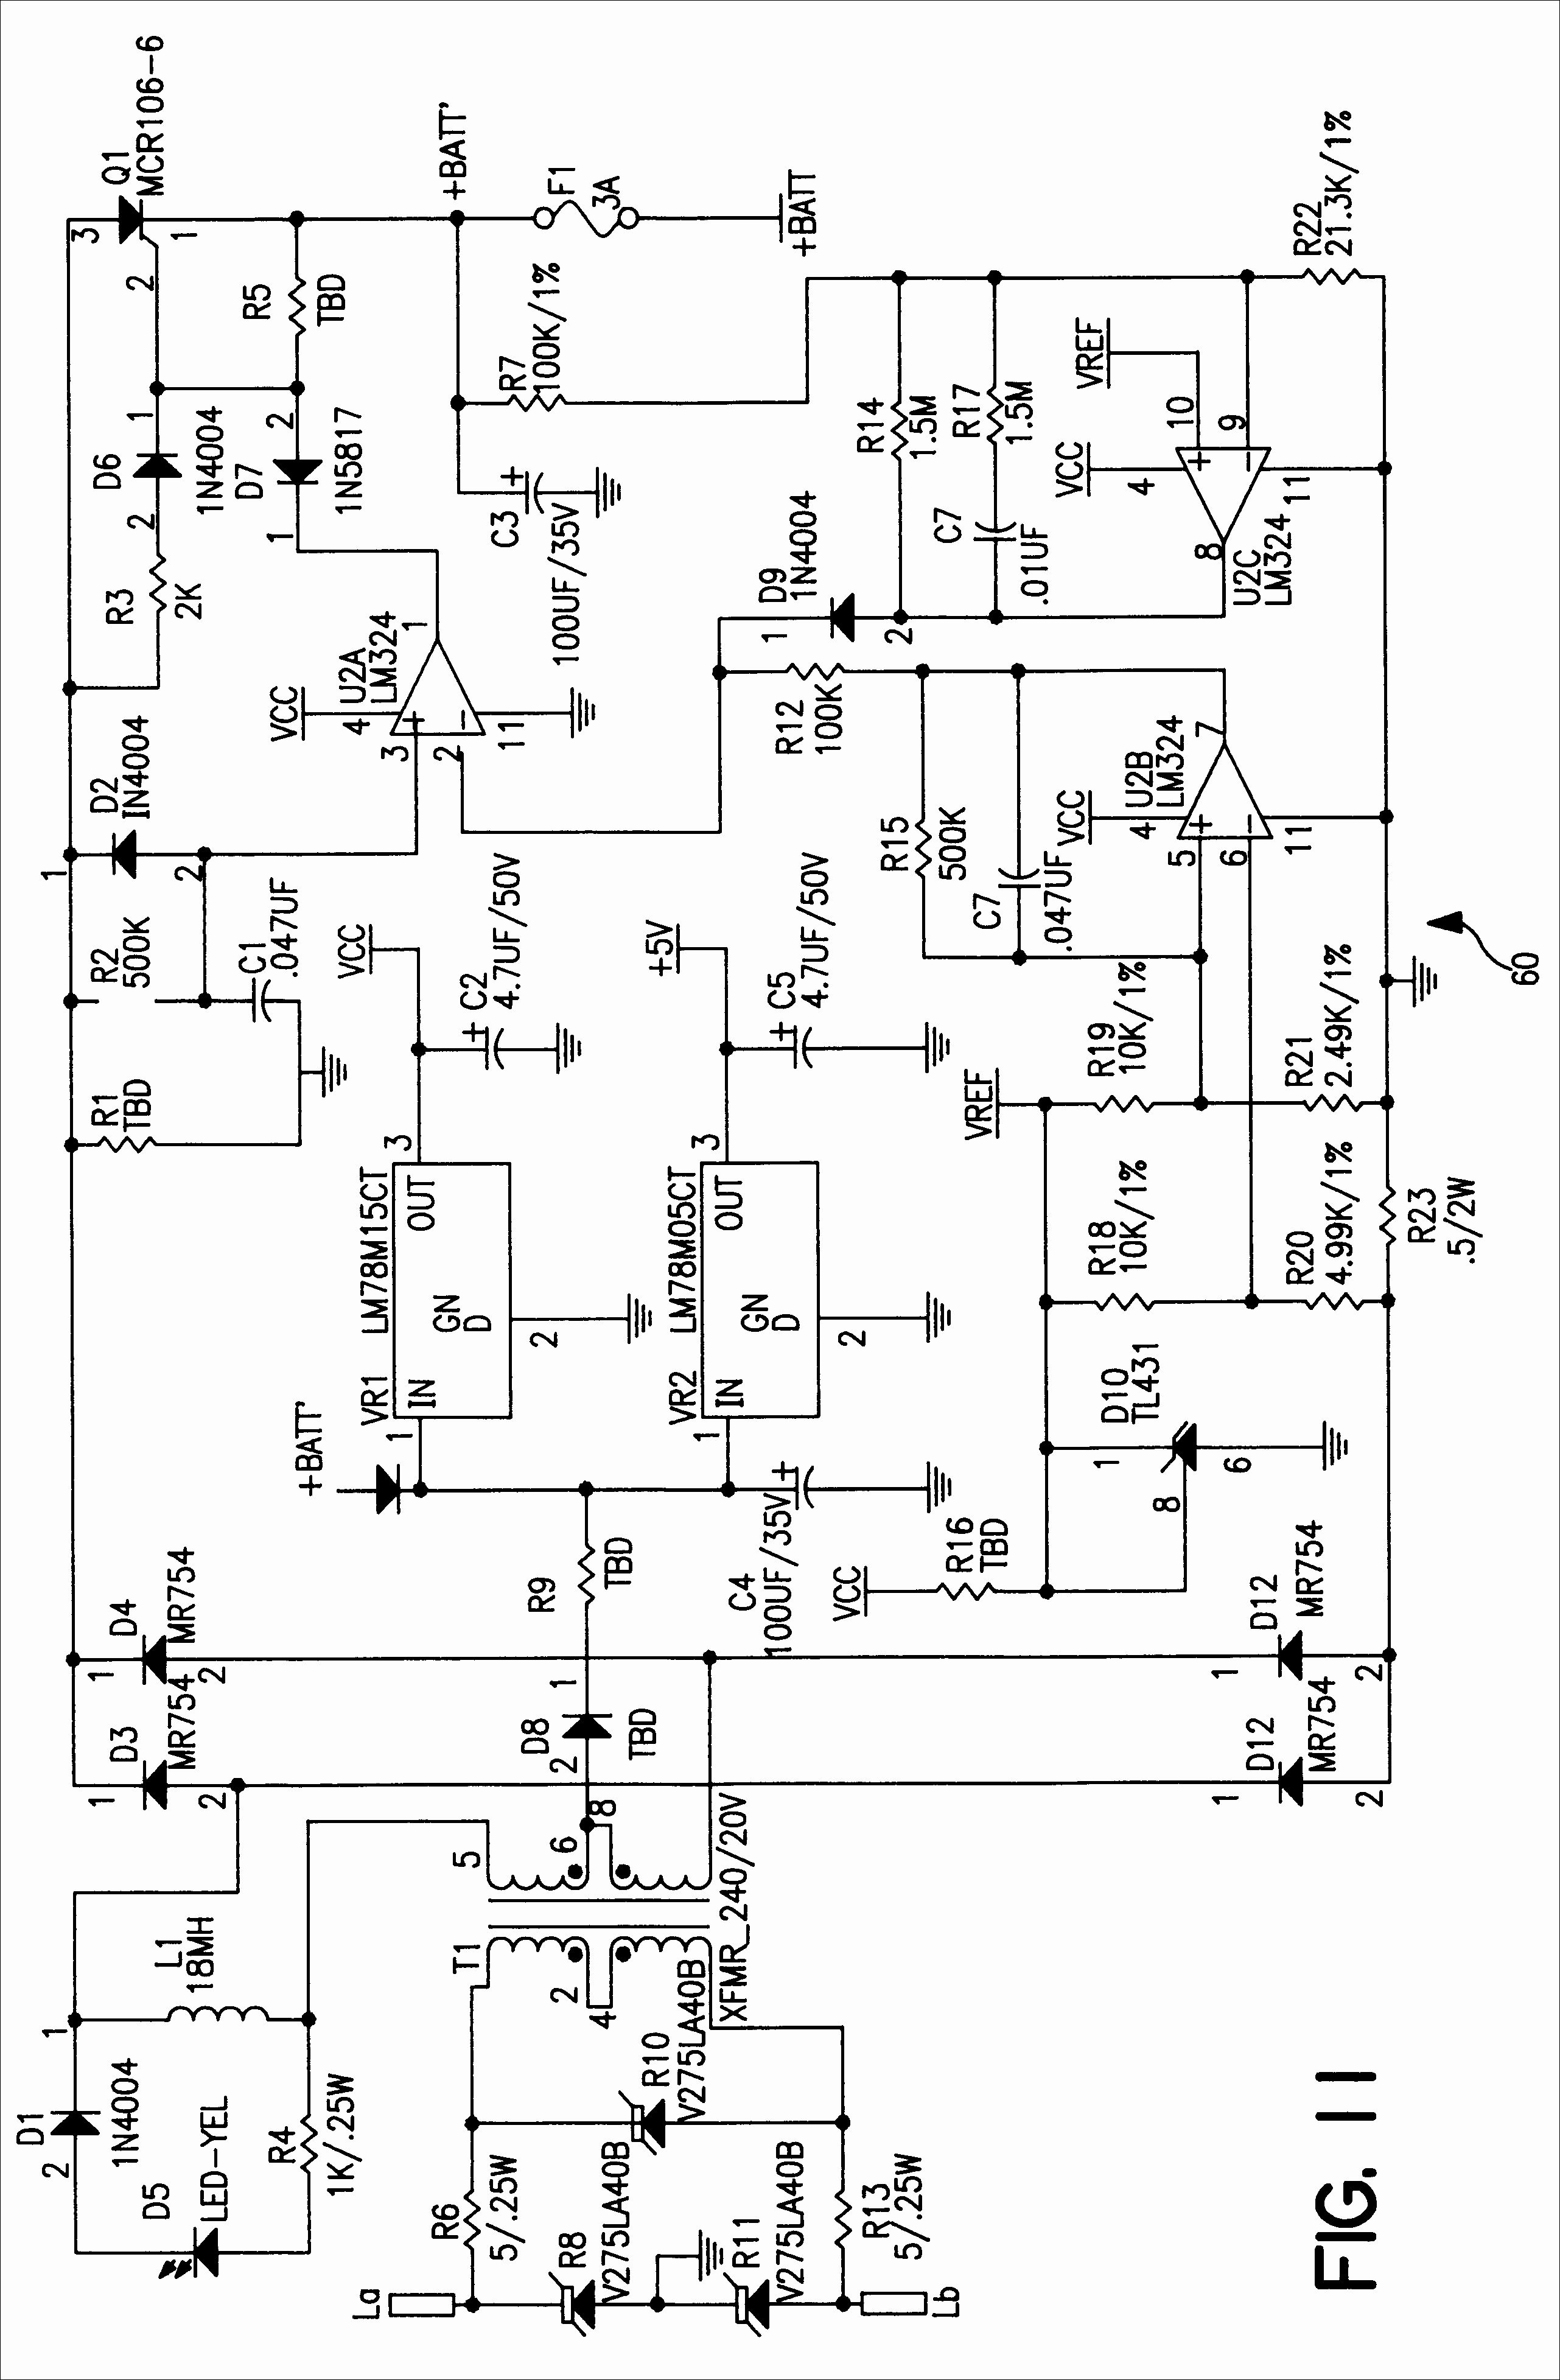 100 Transfer Switch Wiring Diagram | Wiring Diagram - Rv Automatic Transfer Switch Wiring Diagram